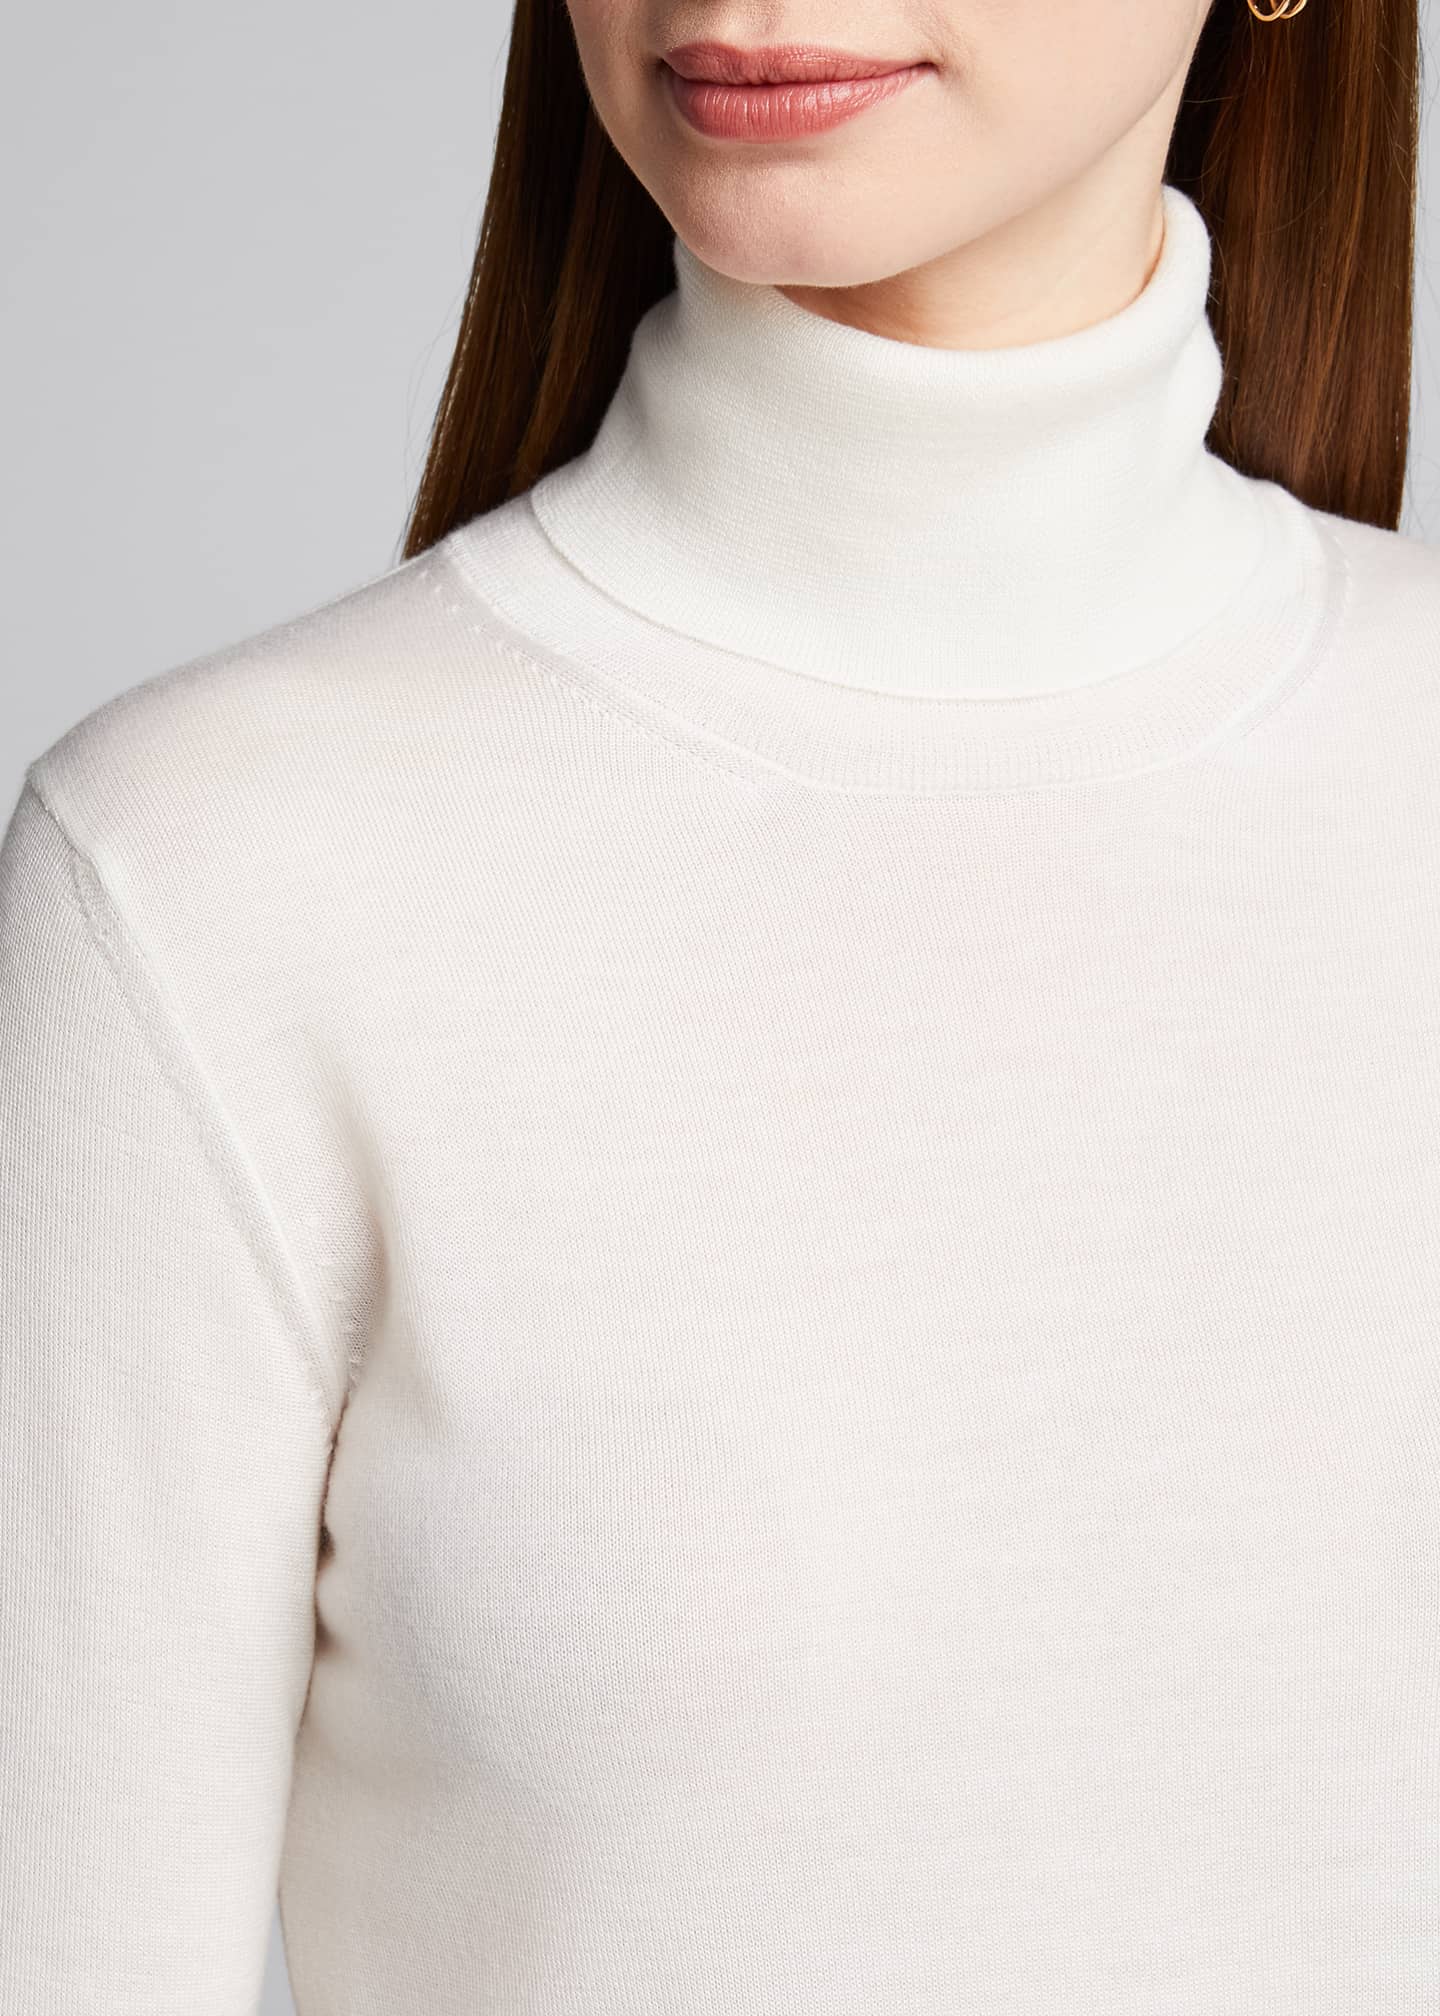 Ralph Lauren Collection Cashmere Long-Sleeve Turtleneck Sweater ...